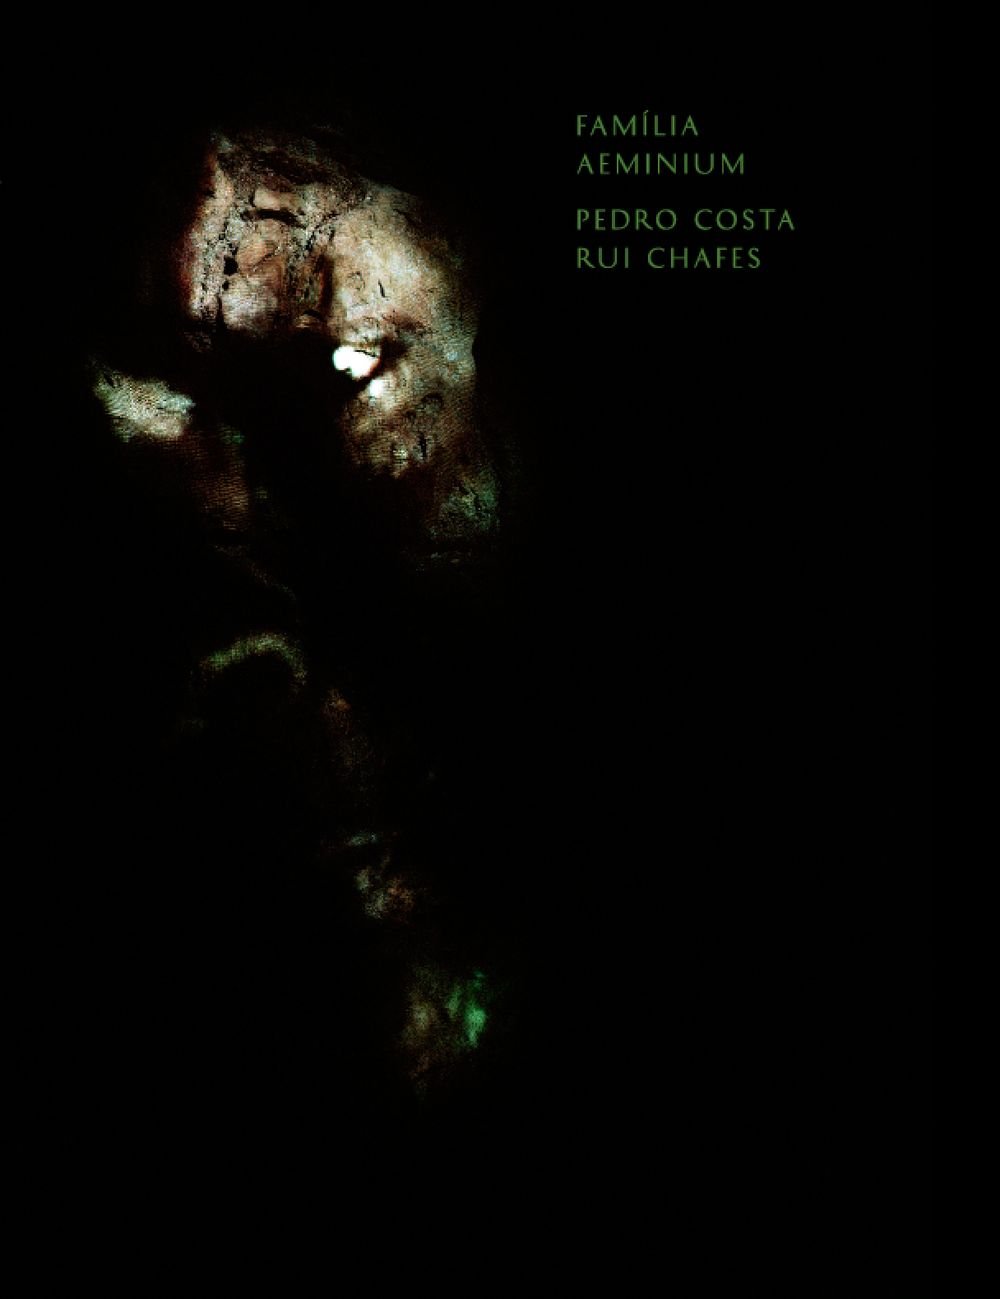 FamÃ­lia Aeminium' de Pedro Costa, Rui Chafes e poema de JoÃ£o Miguel Fernandes Jorge, pela chancela Pierre Von Kleist Editions